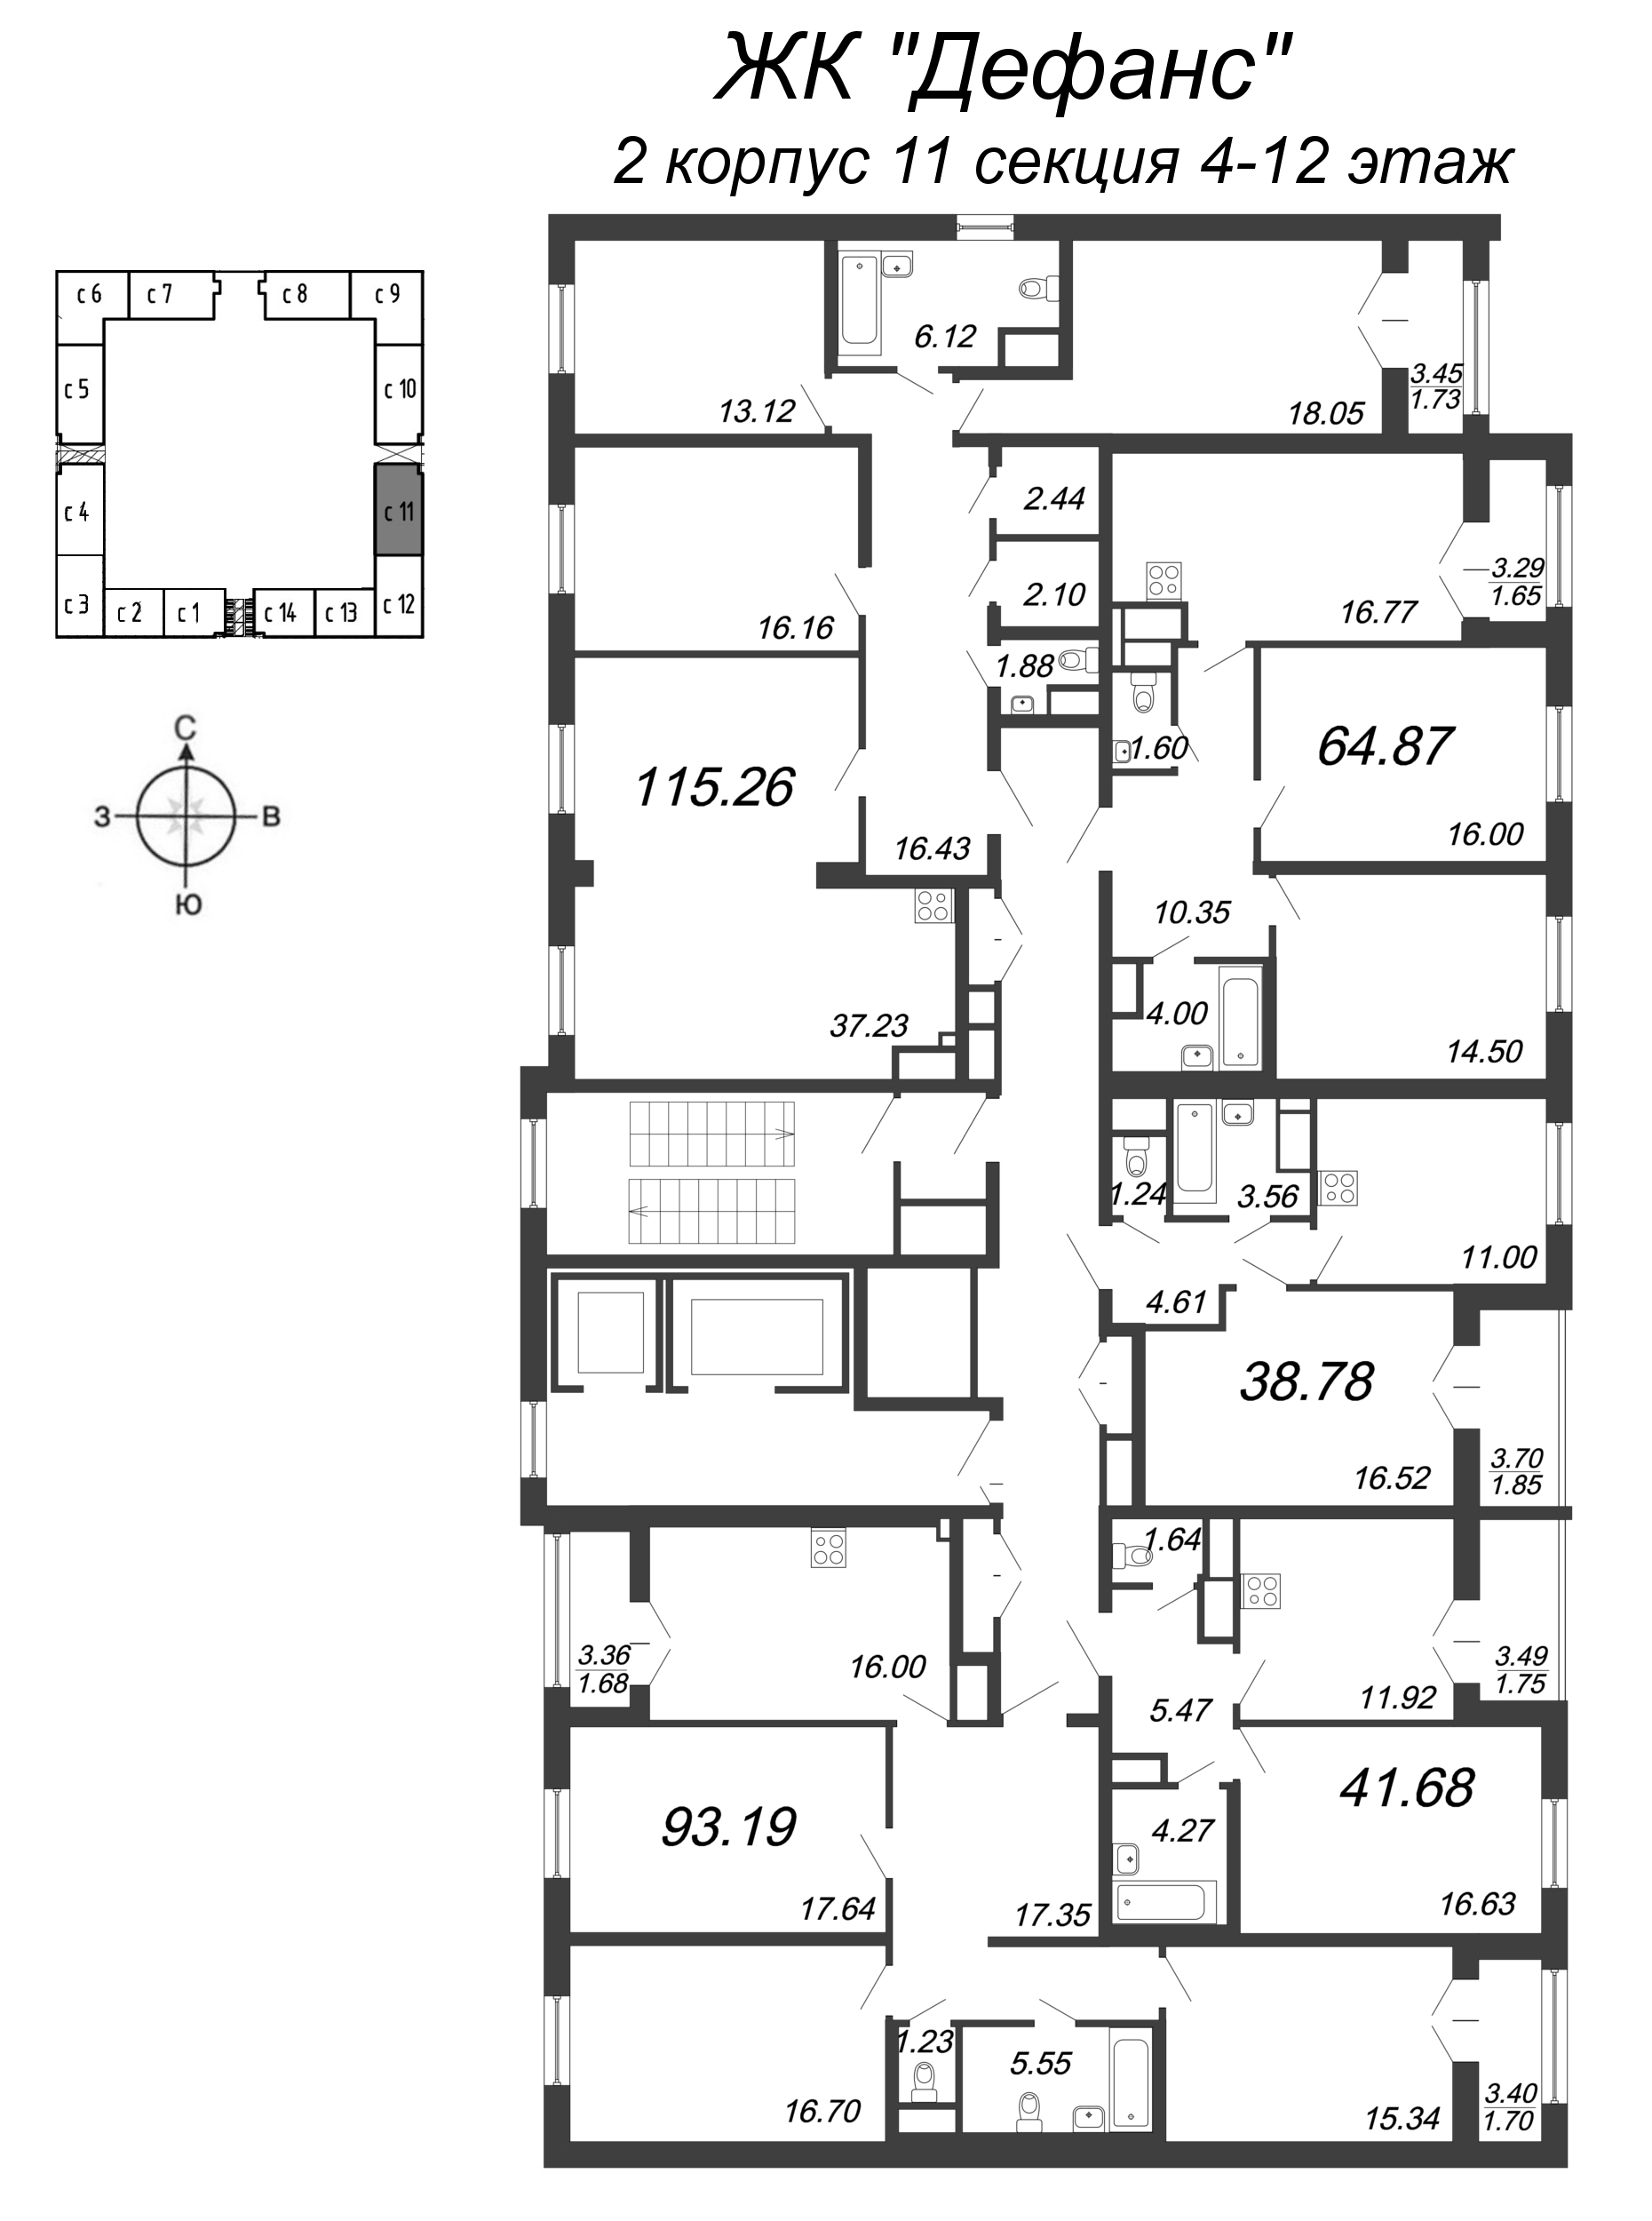 4-комнатная (Евро) квартира, 115.26 м² - планировка этажа